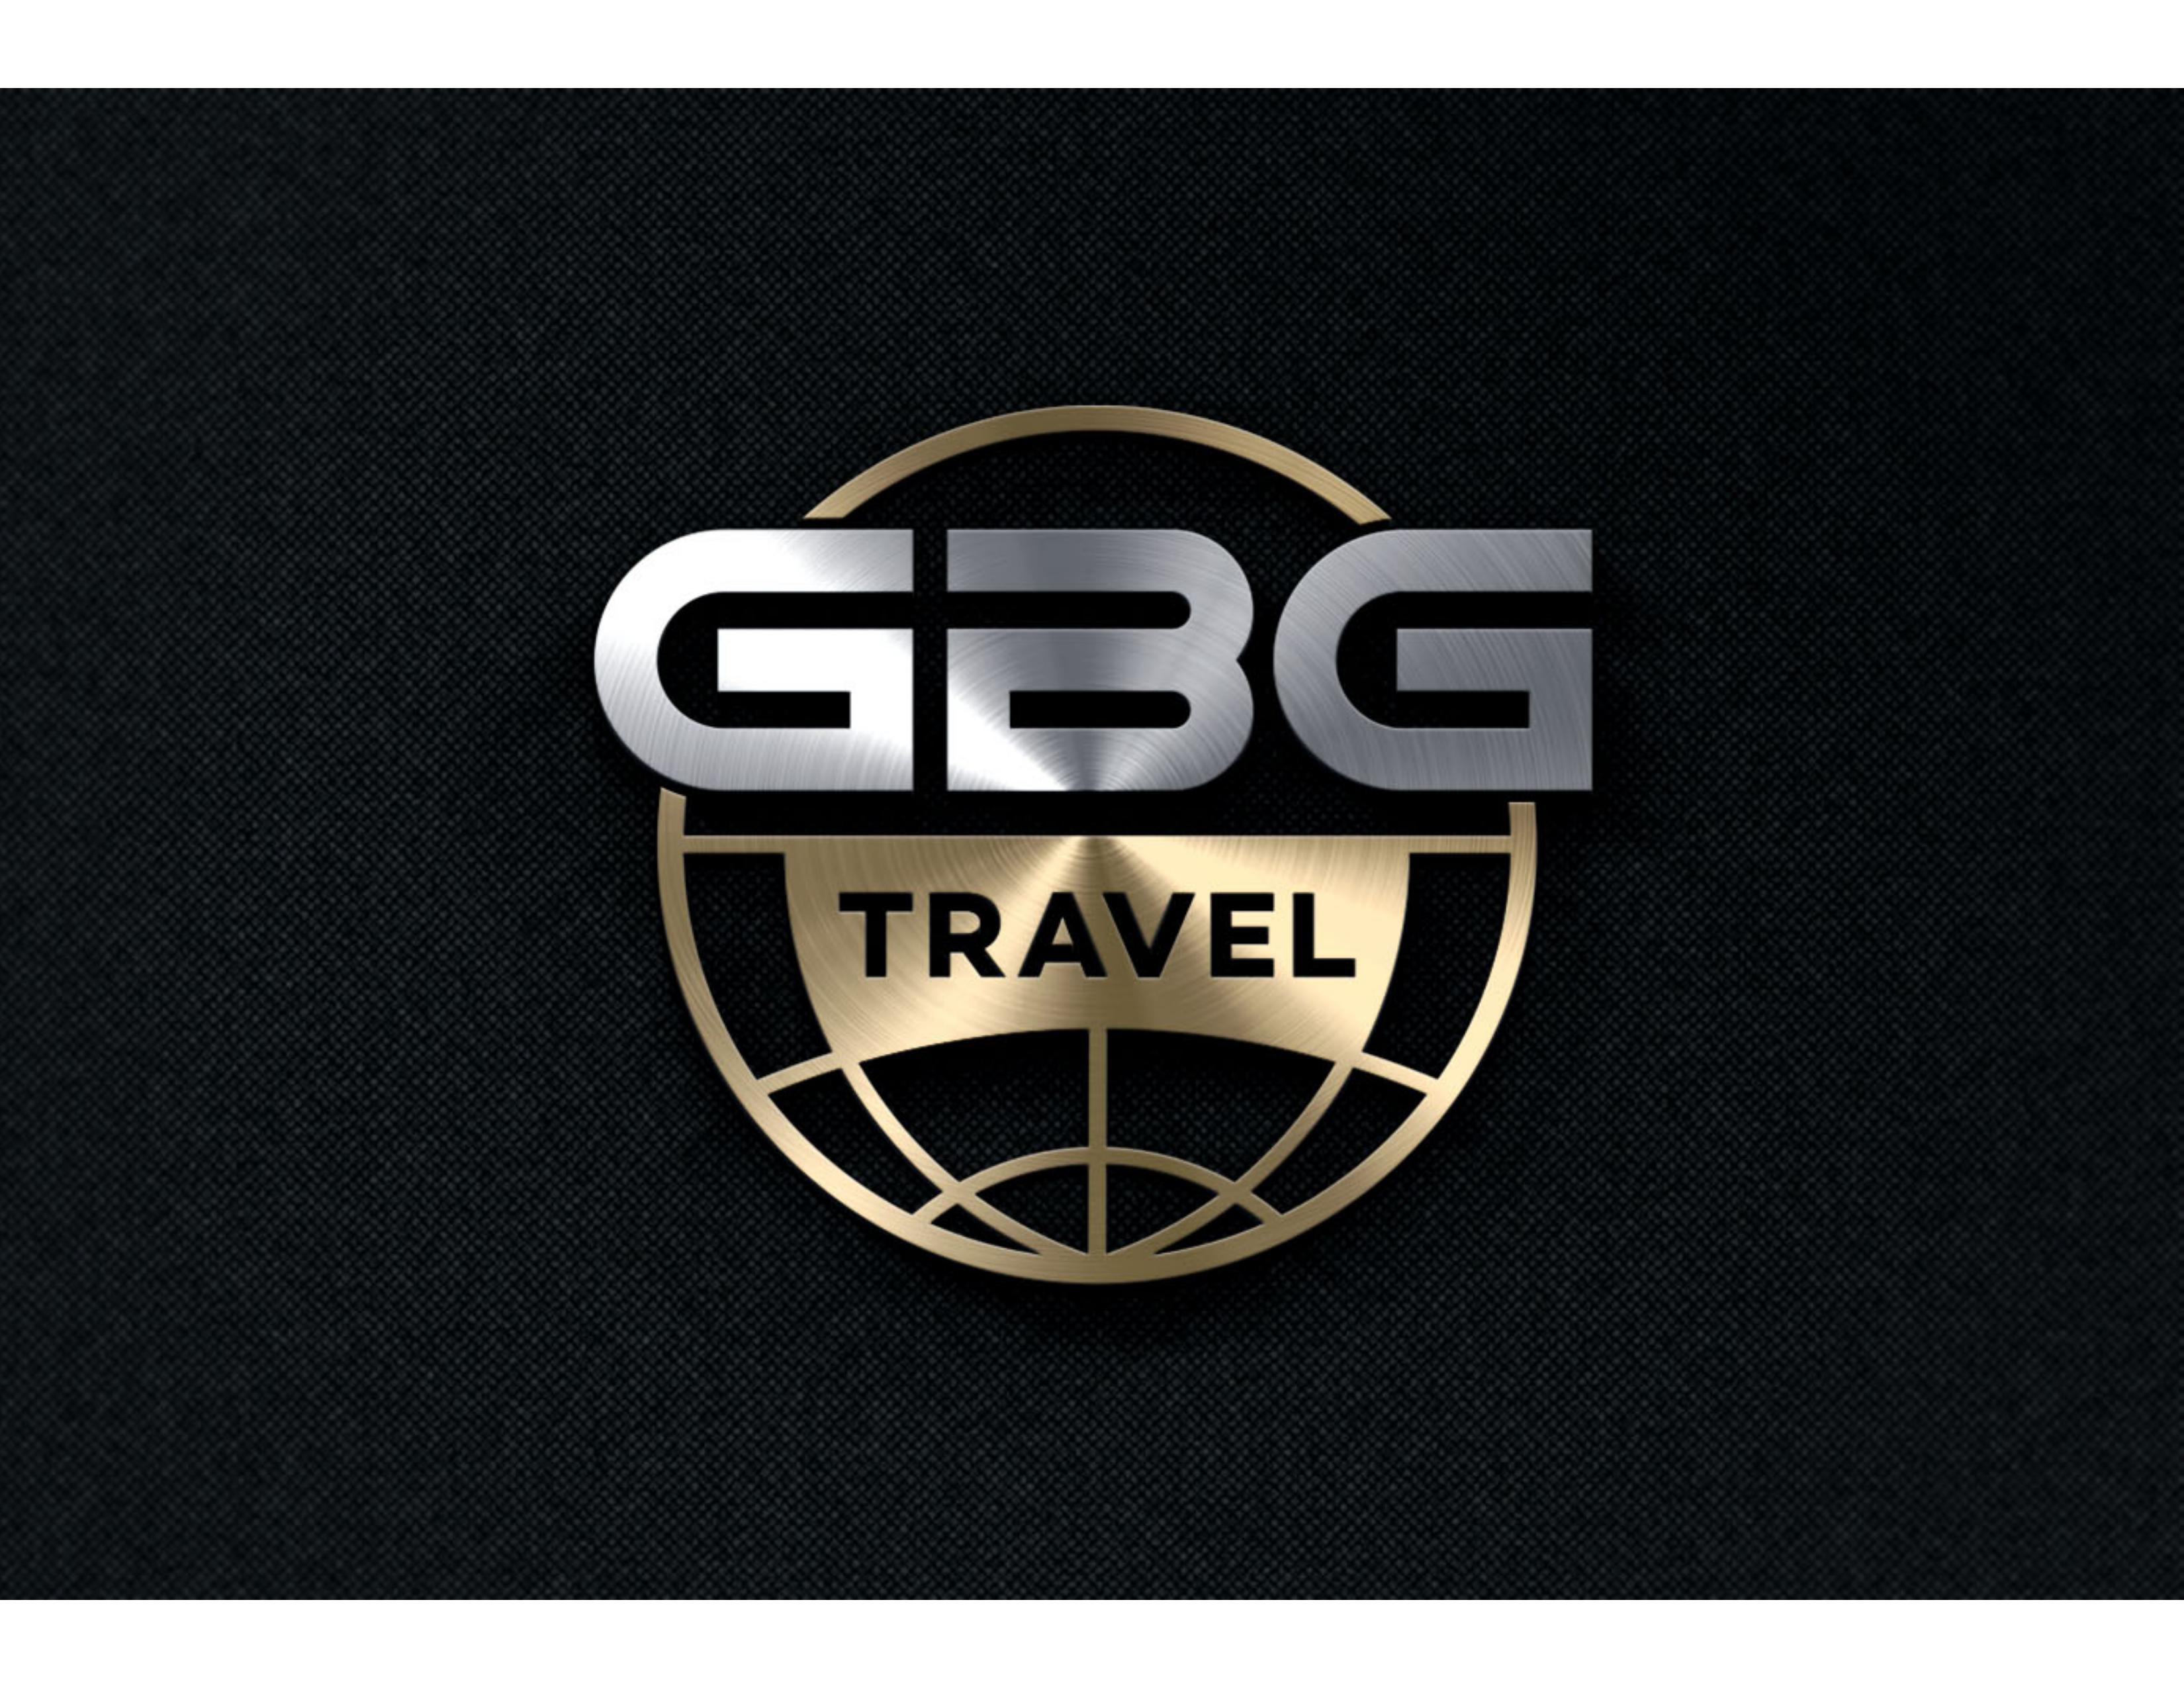 GBG Travel